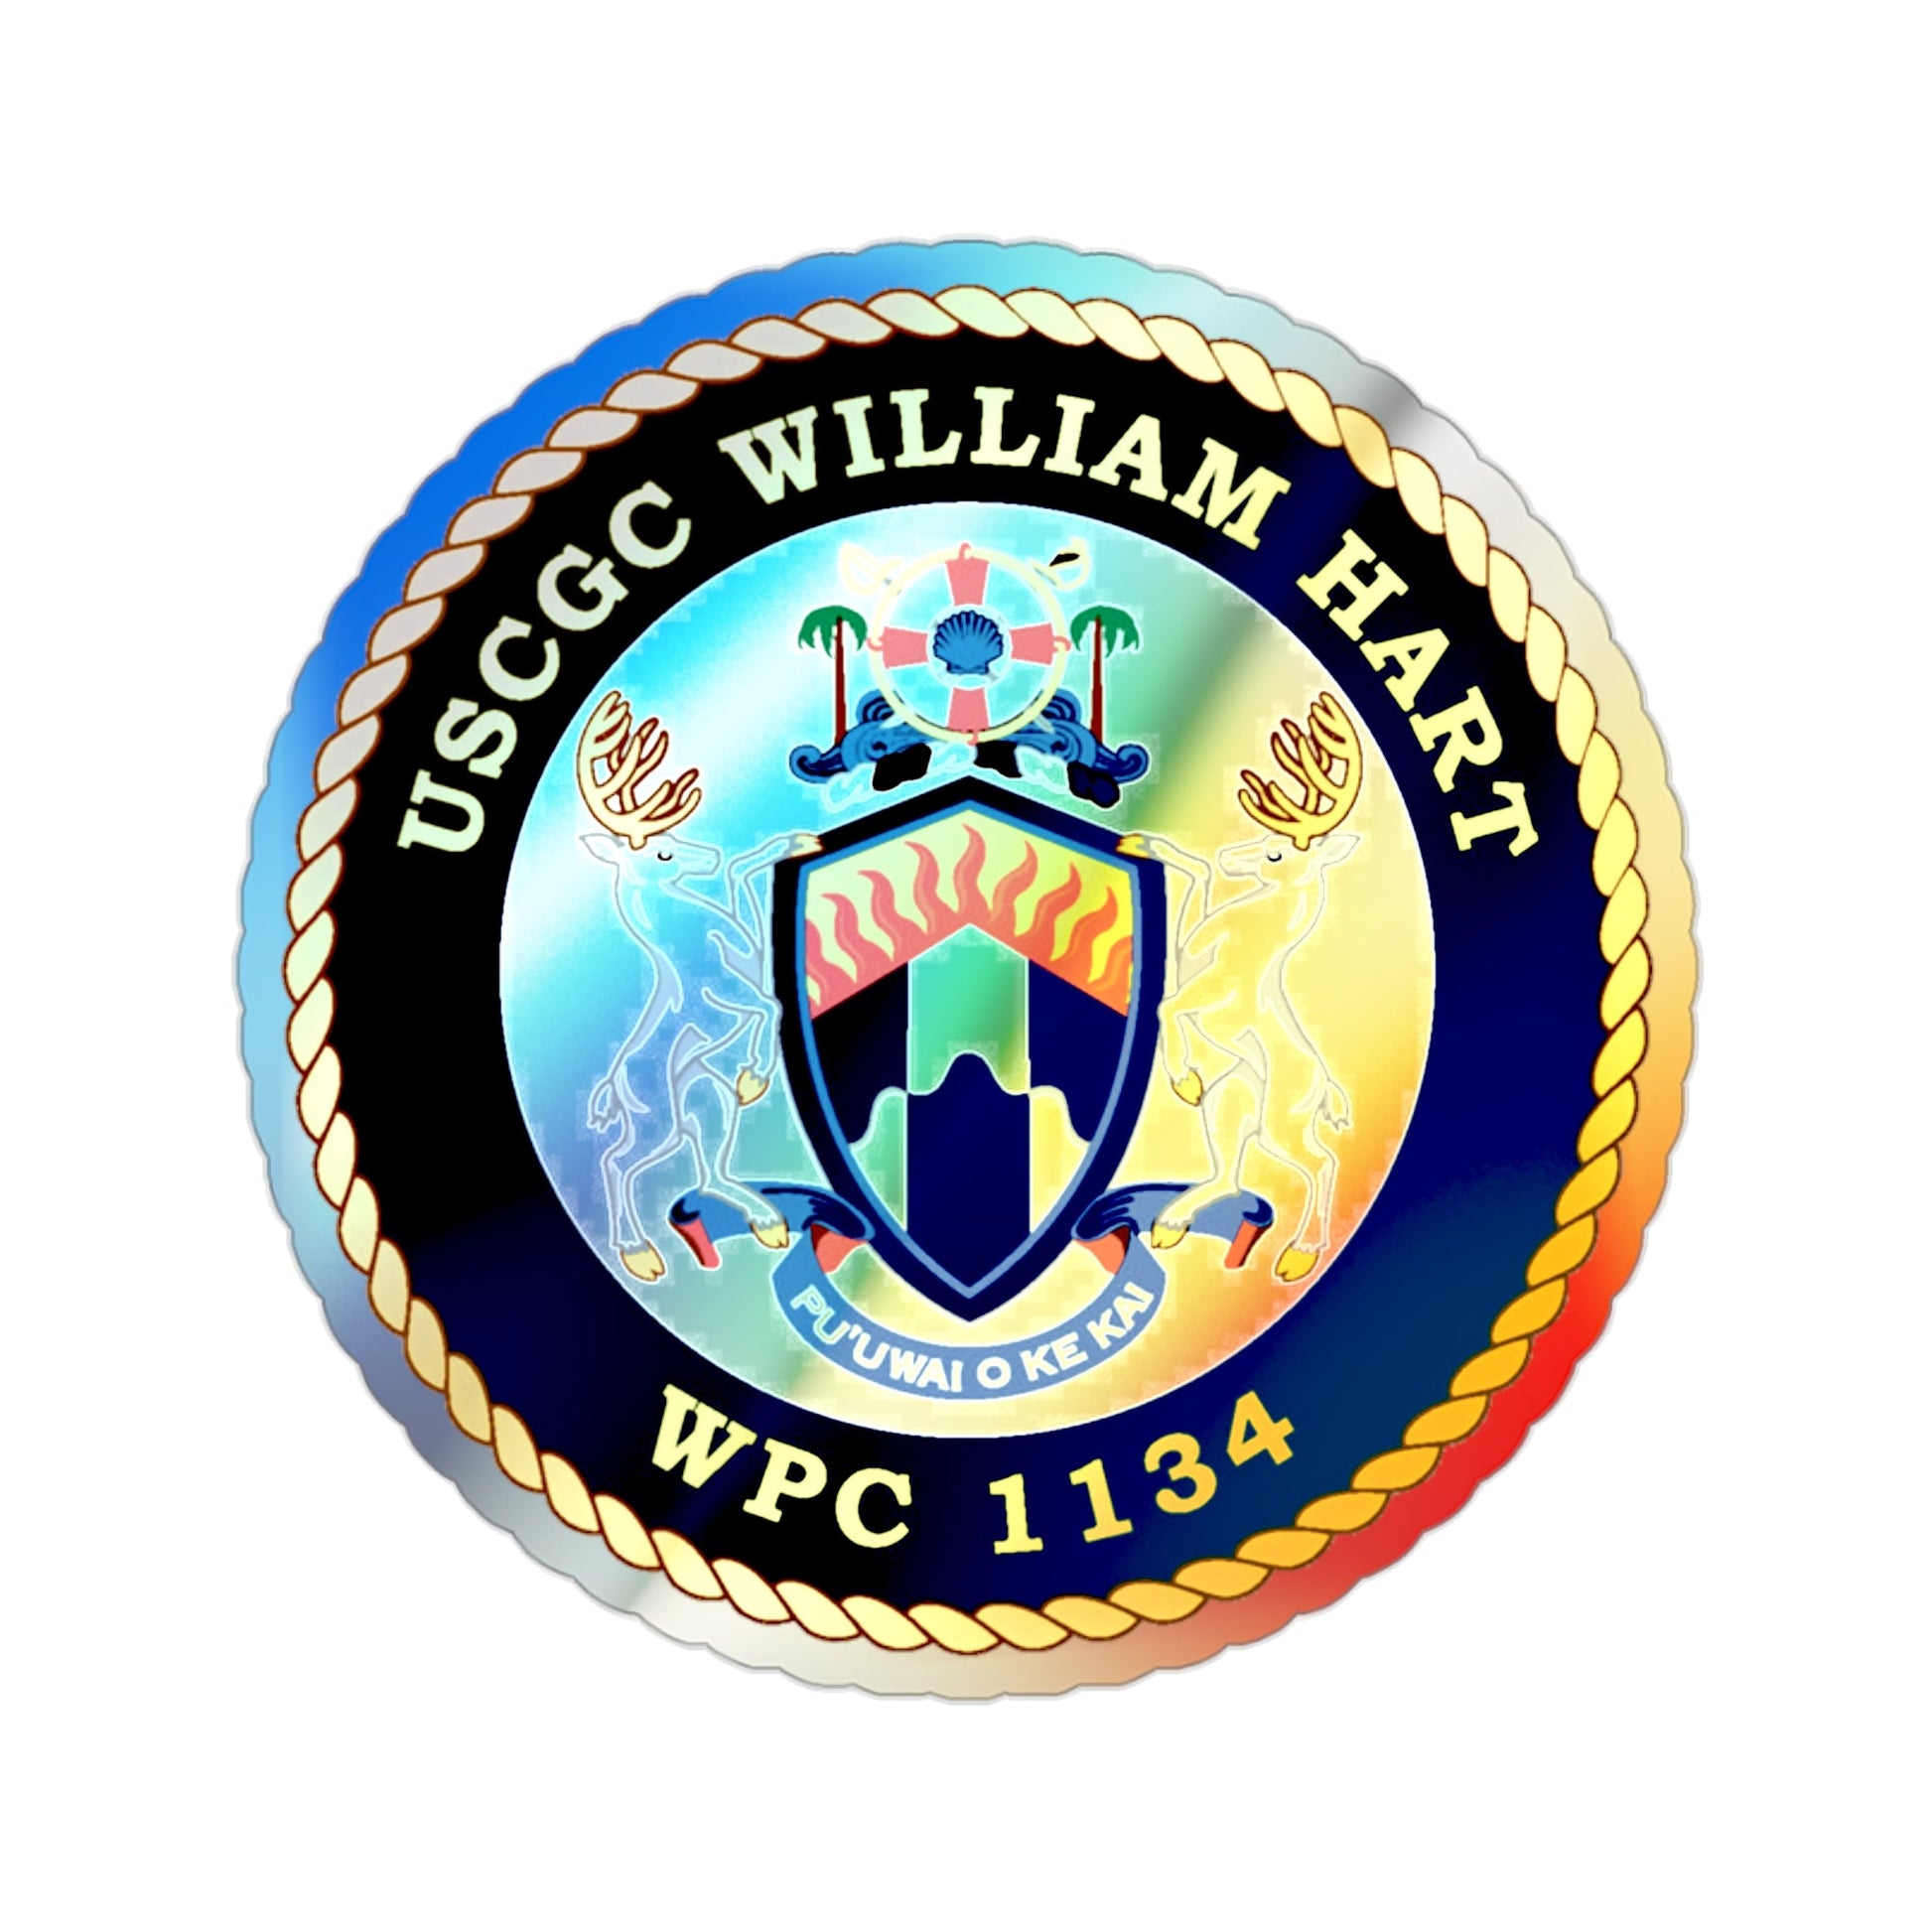 USCG C William Hart WPC 1134 (U.S. Coast Guard) Holographic STICKER Die-Cut Vinyl Decal-2 Inch-The Sticker Space